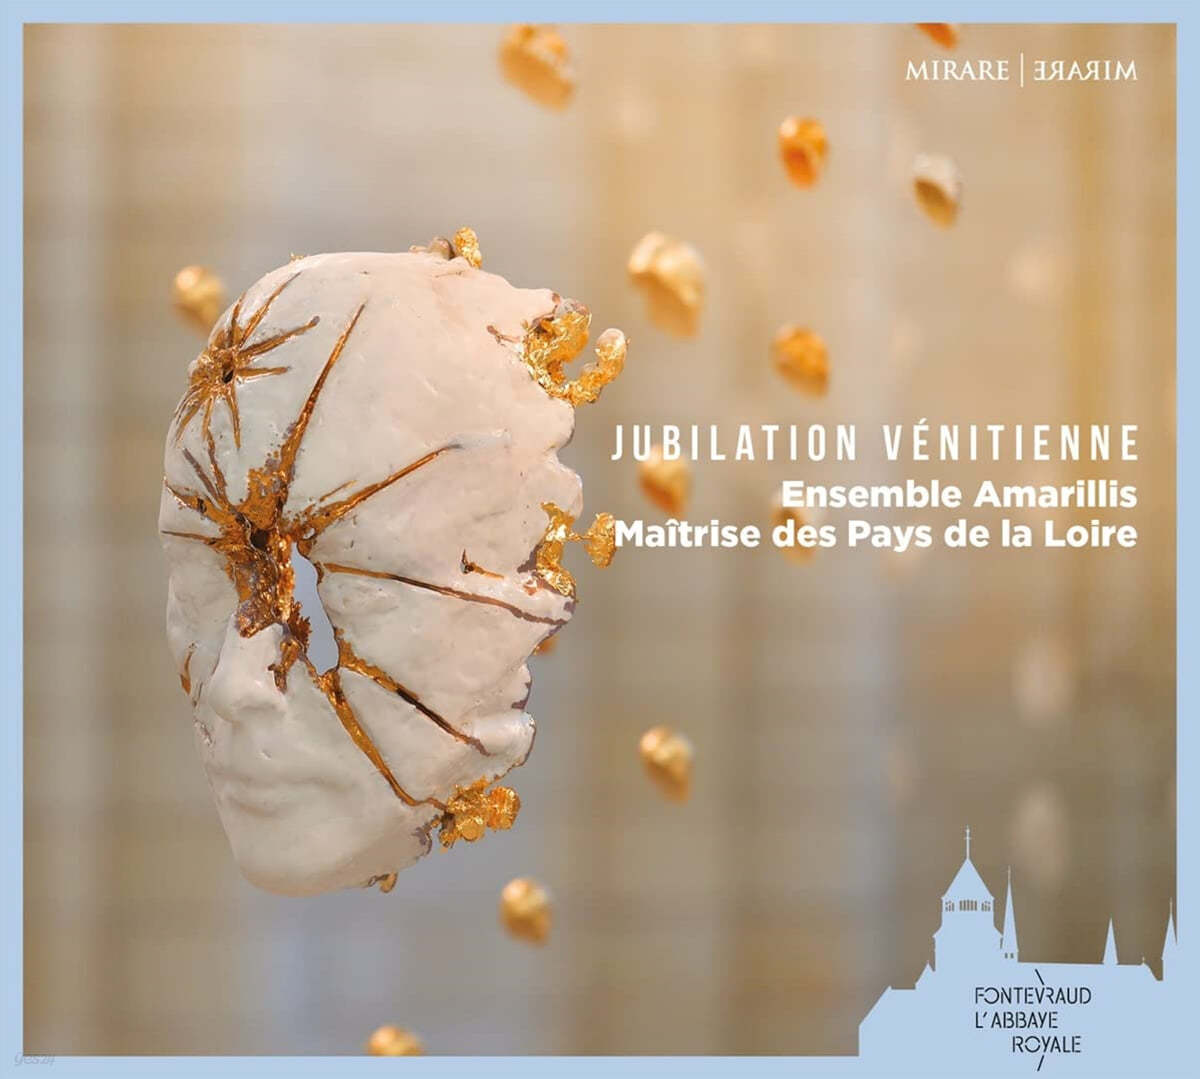 Ensemble Amarillis 비발디 / 칼다라: 베네치아의 환희 (Jubilation Venitienne) 